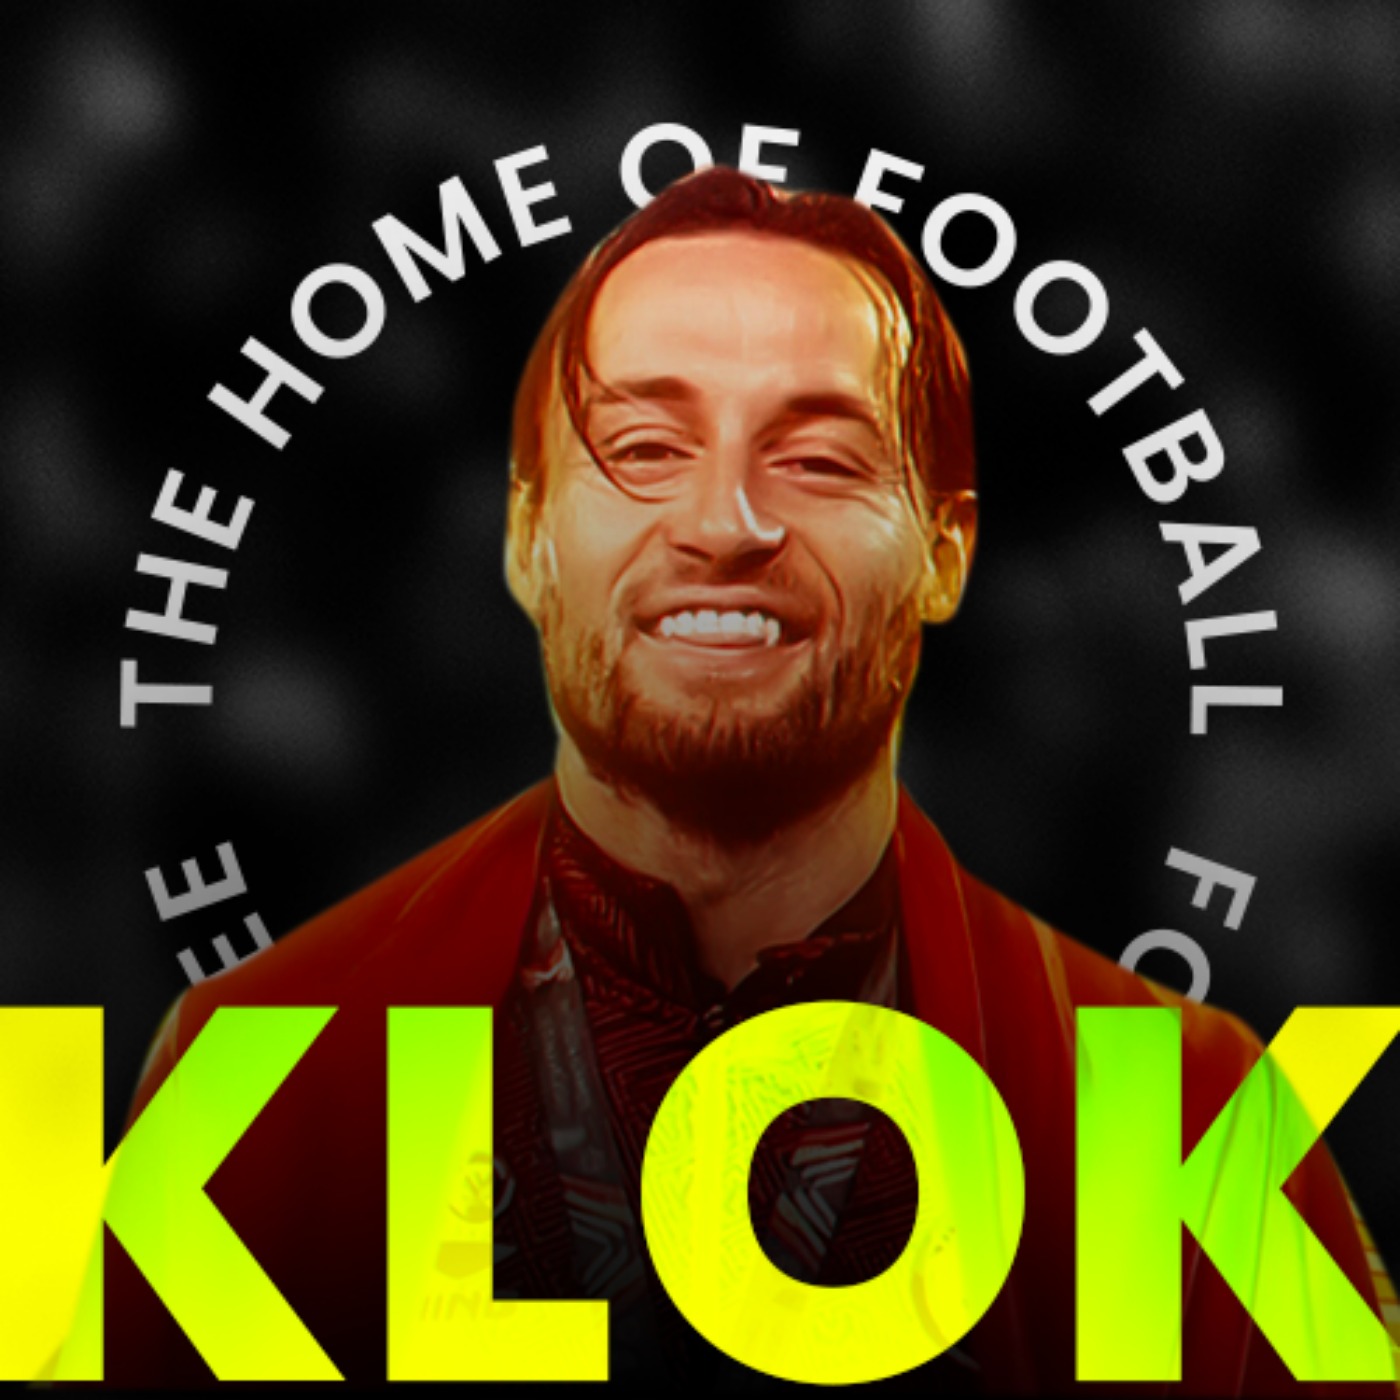 Meet Indonesian star Marc Klok